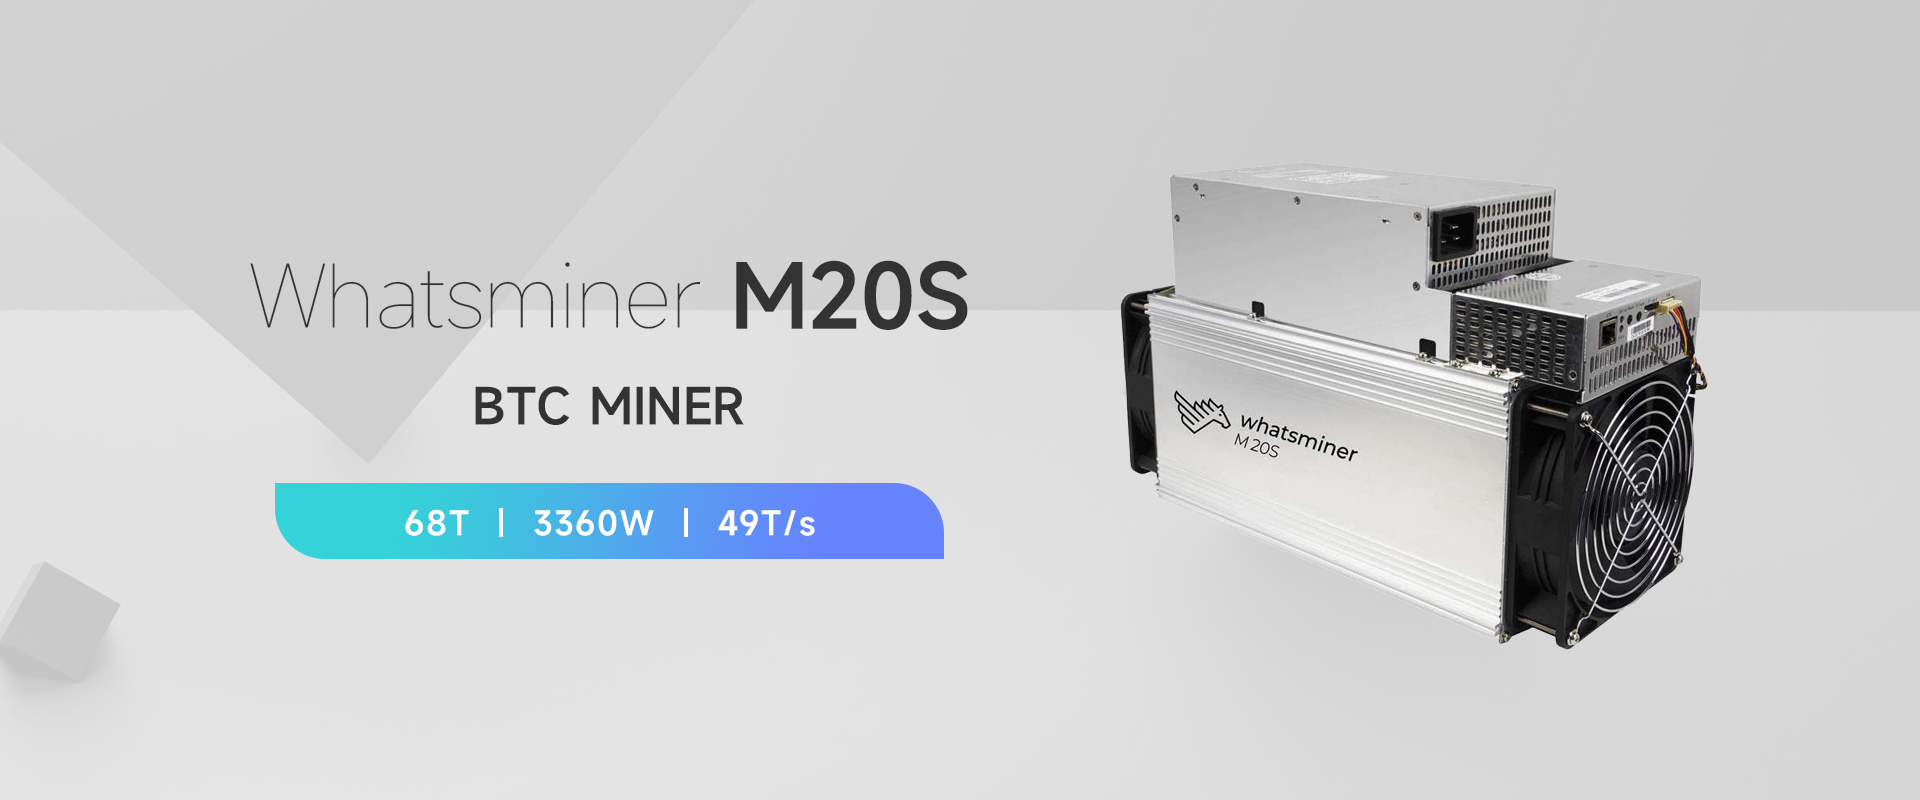 MicroBT Whatsminer M20S